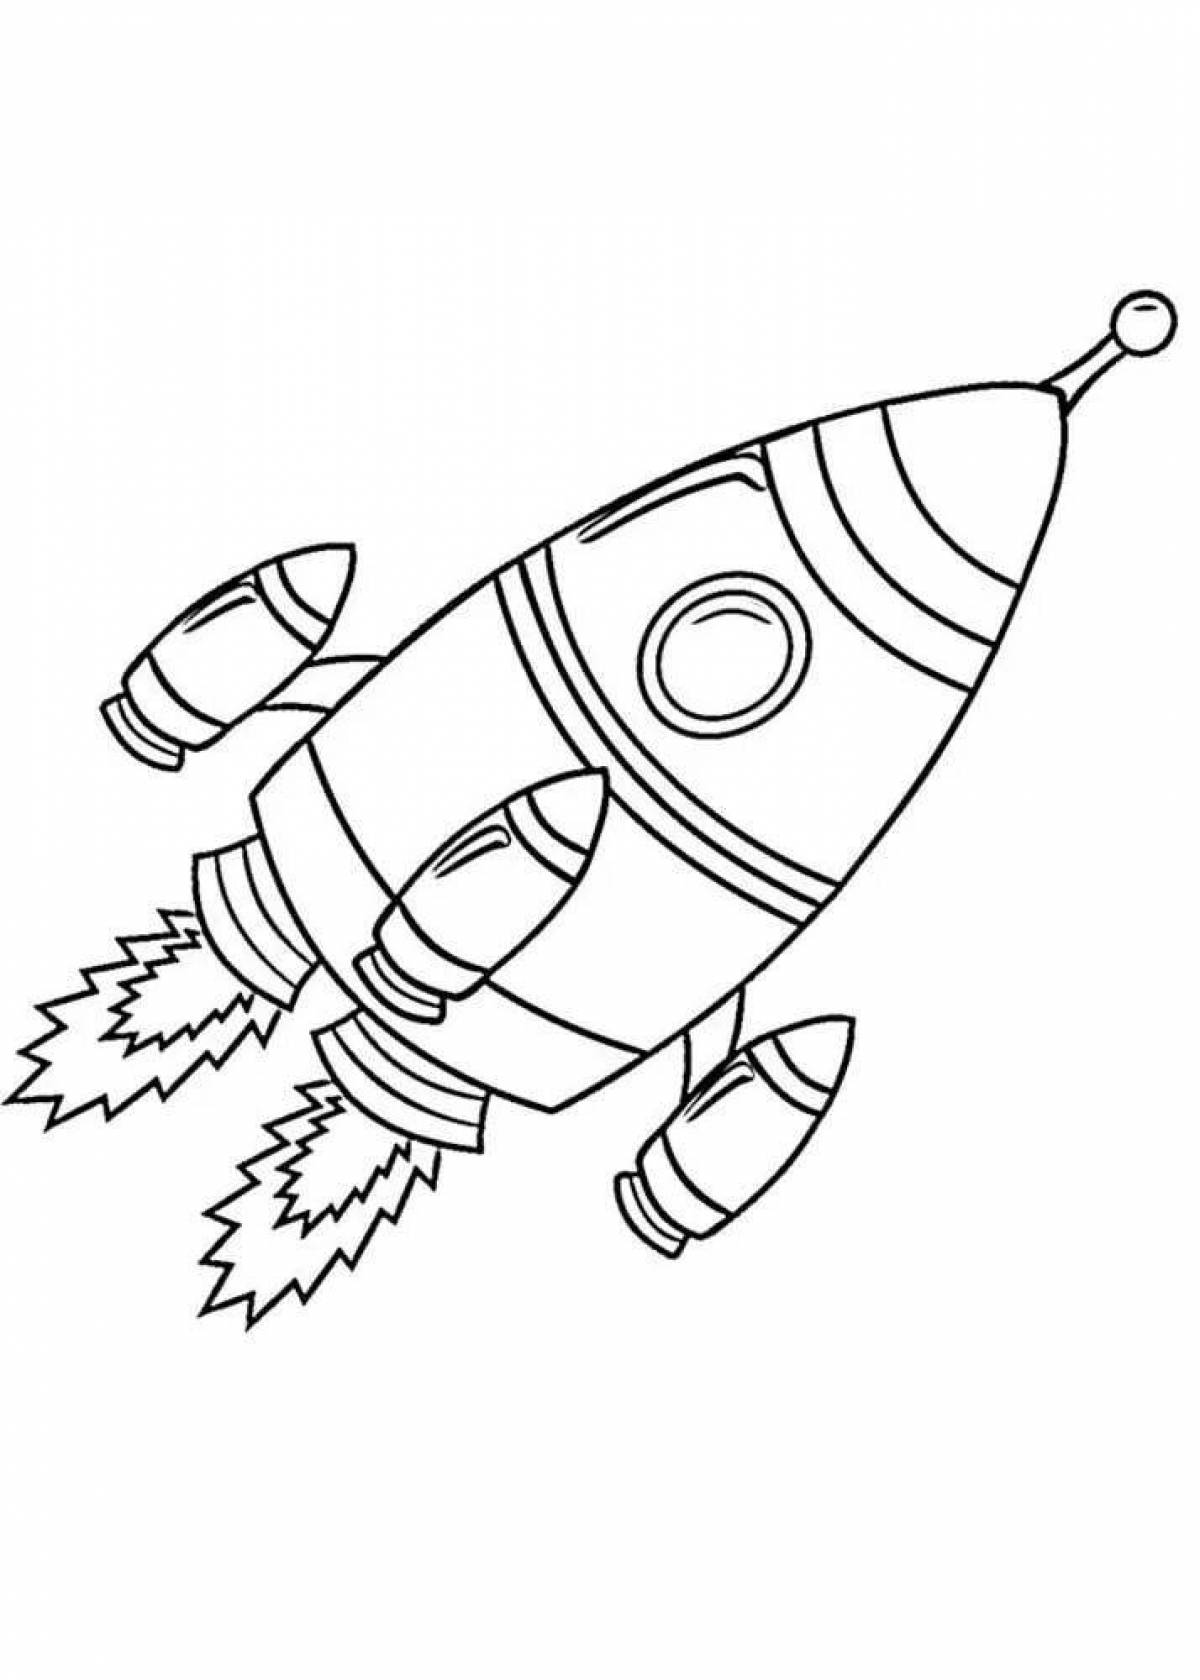 Dazzling rocket drawing